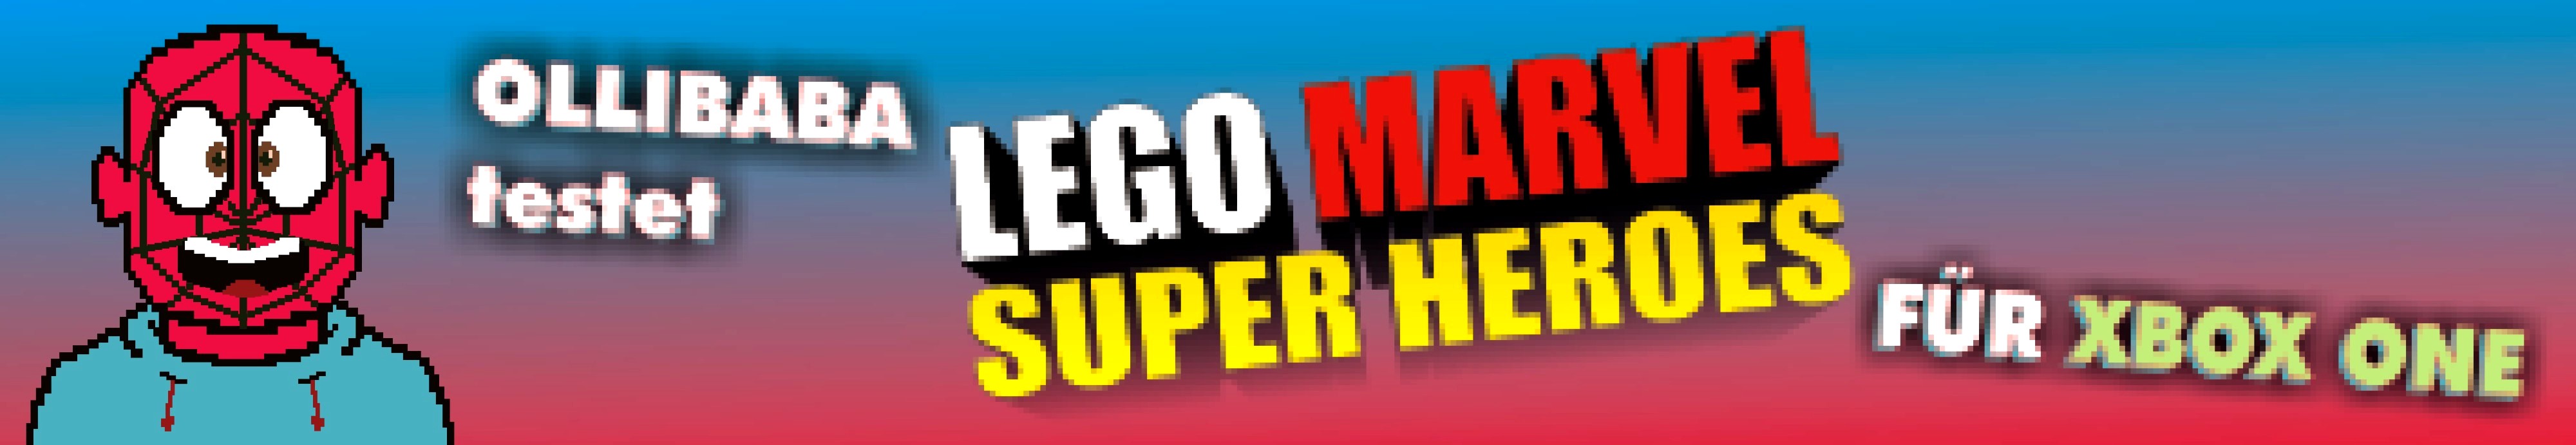 pixel - LEGO MARVEL SUPERHEROES - ganz oben